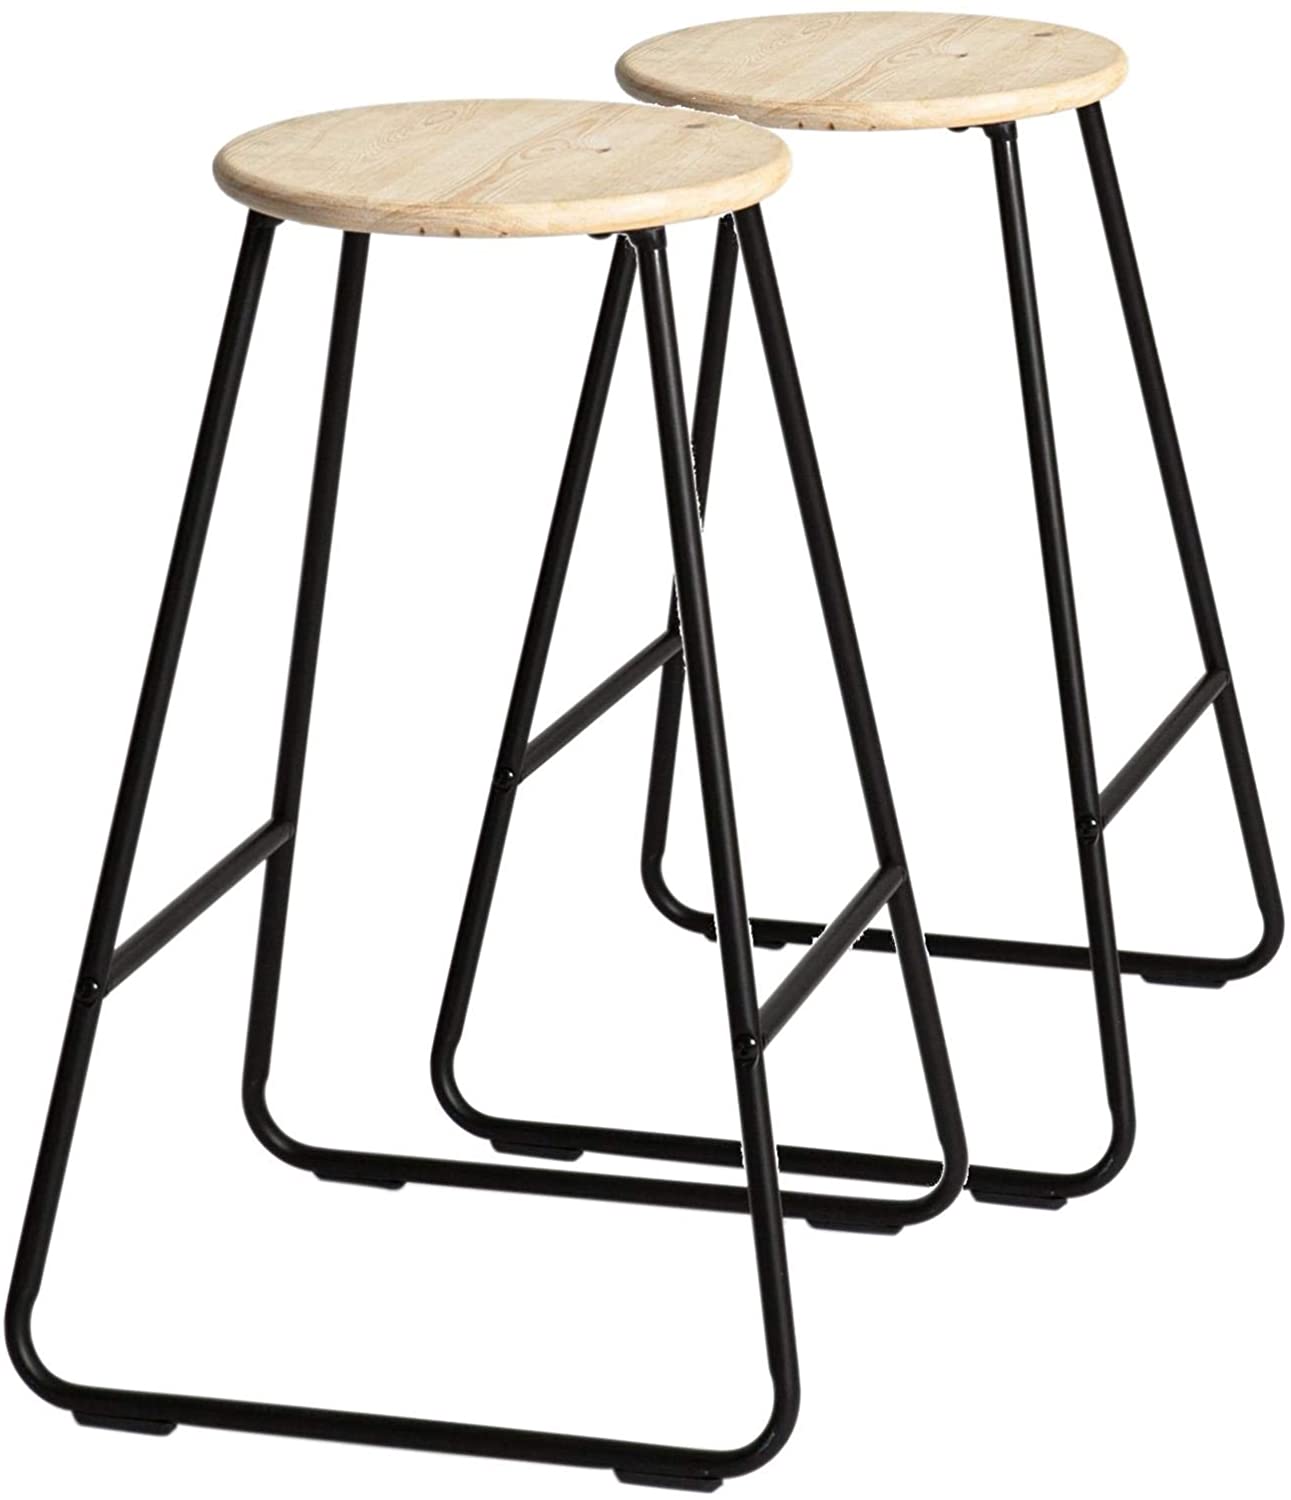 oak bar stools for kitchen islands